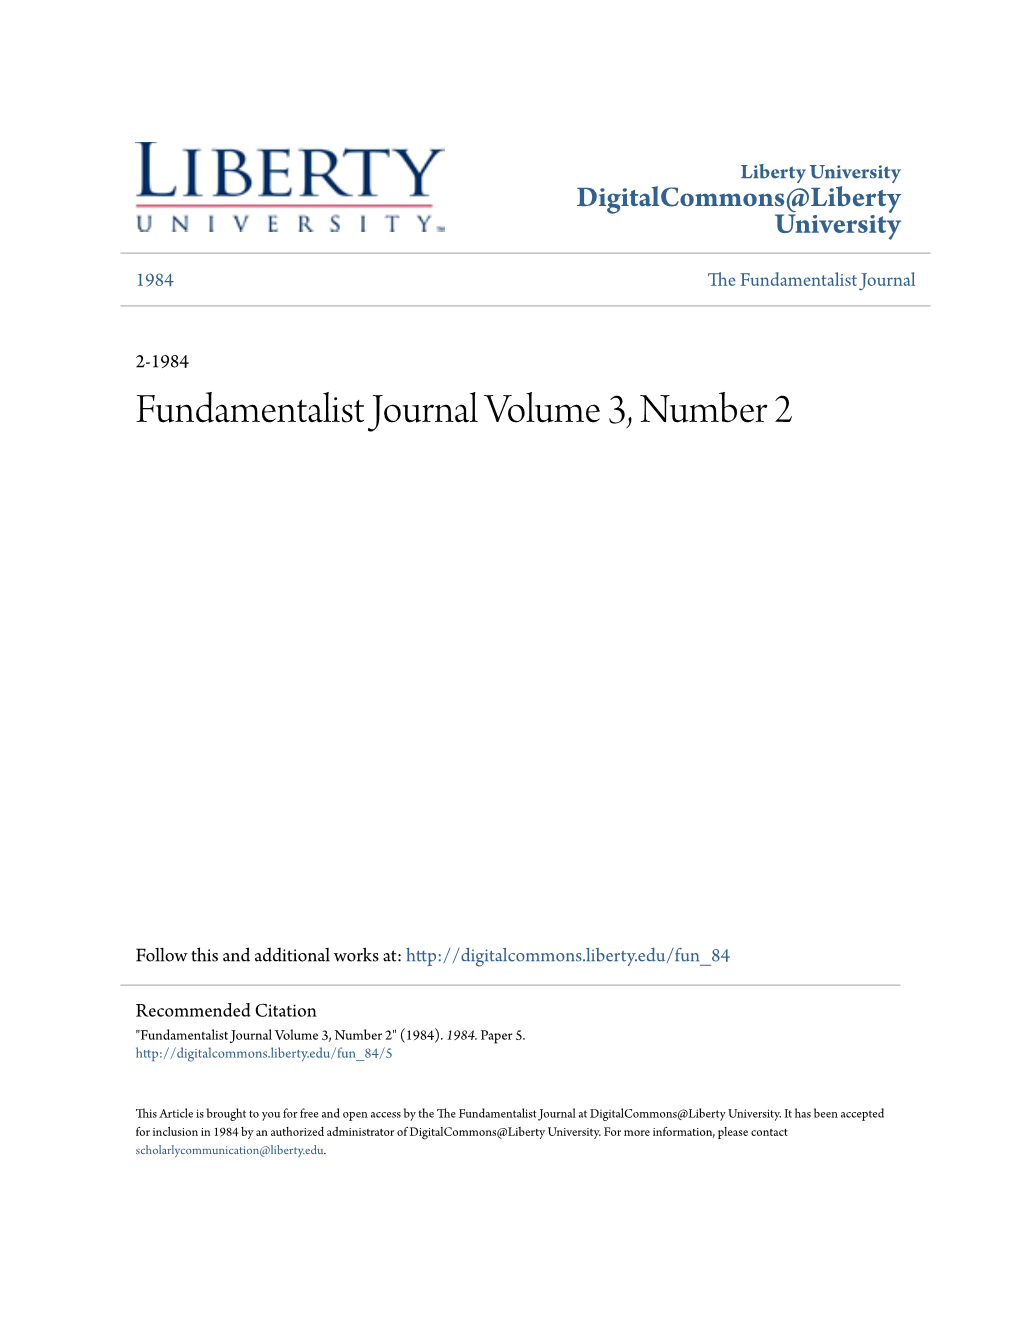 Fundamentalist Journal Volume 3, Number 2